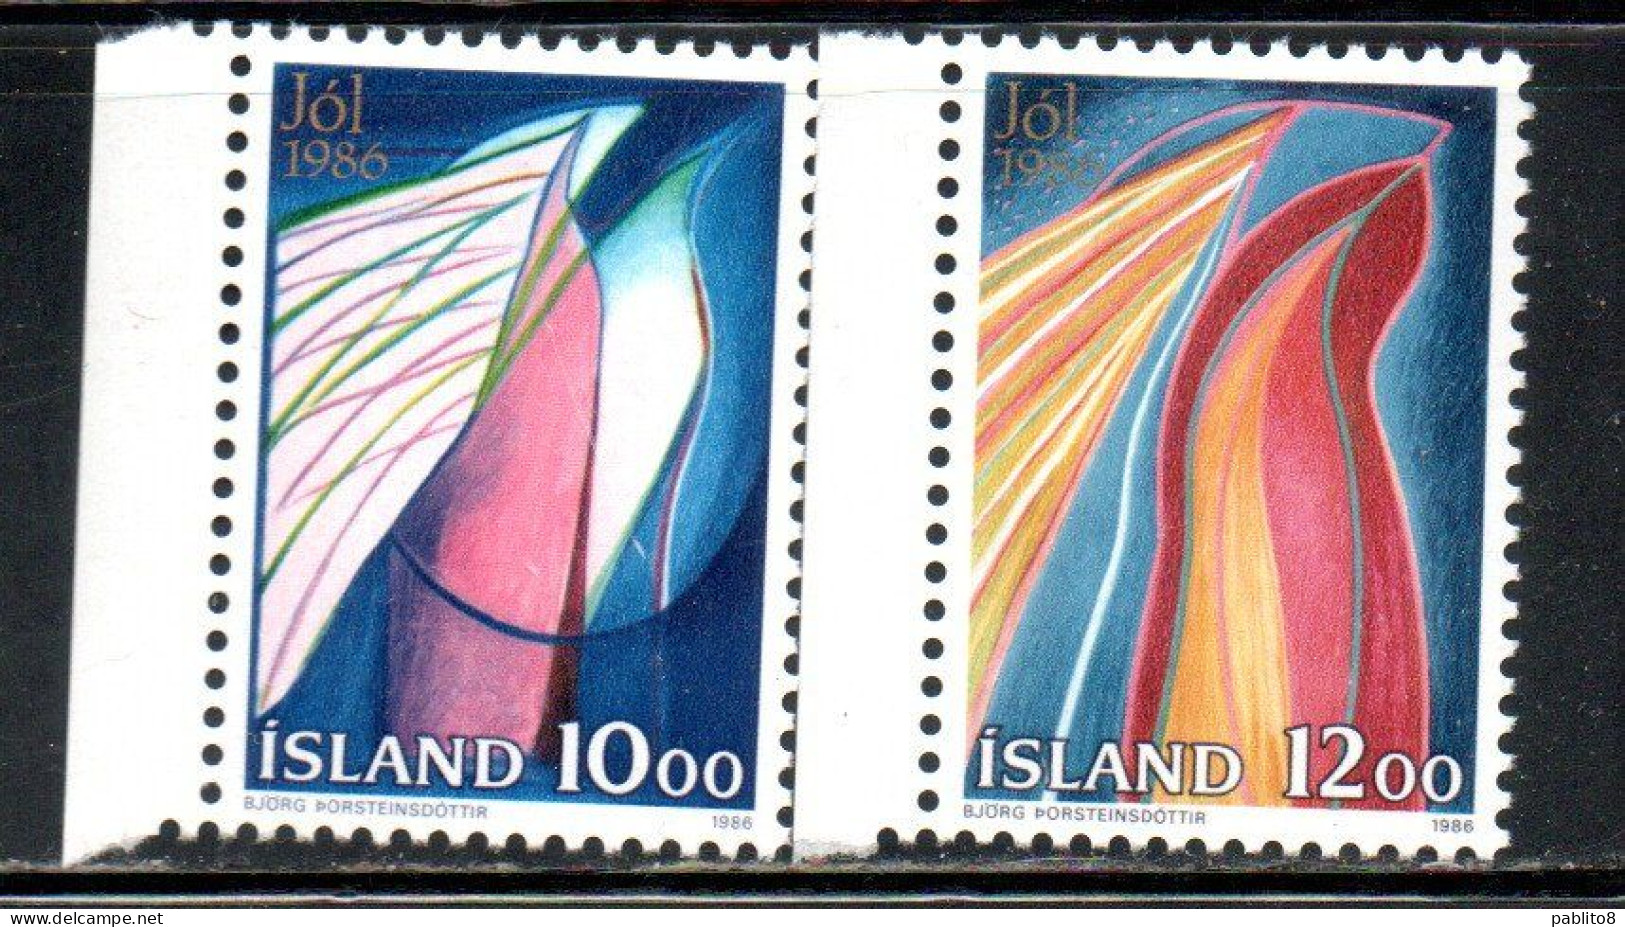 ISLANDA ICELAND ISLANDE ISLAND 1986 CHRISTMAS NATALE NOEL WEIHNACHTEN NAVIDAD JOL COMPLETE SET SERIE COMPLETA MNH - Nuovi